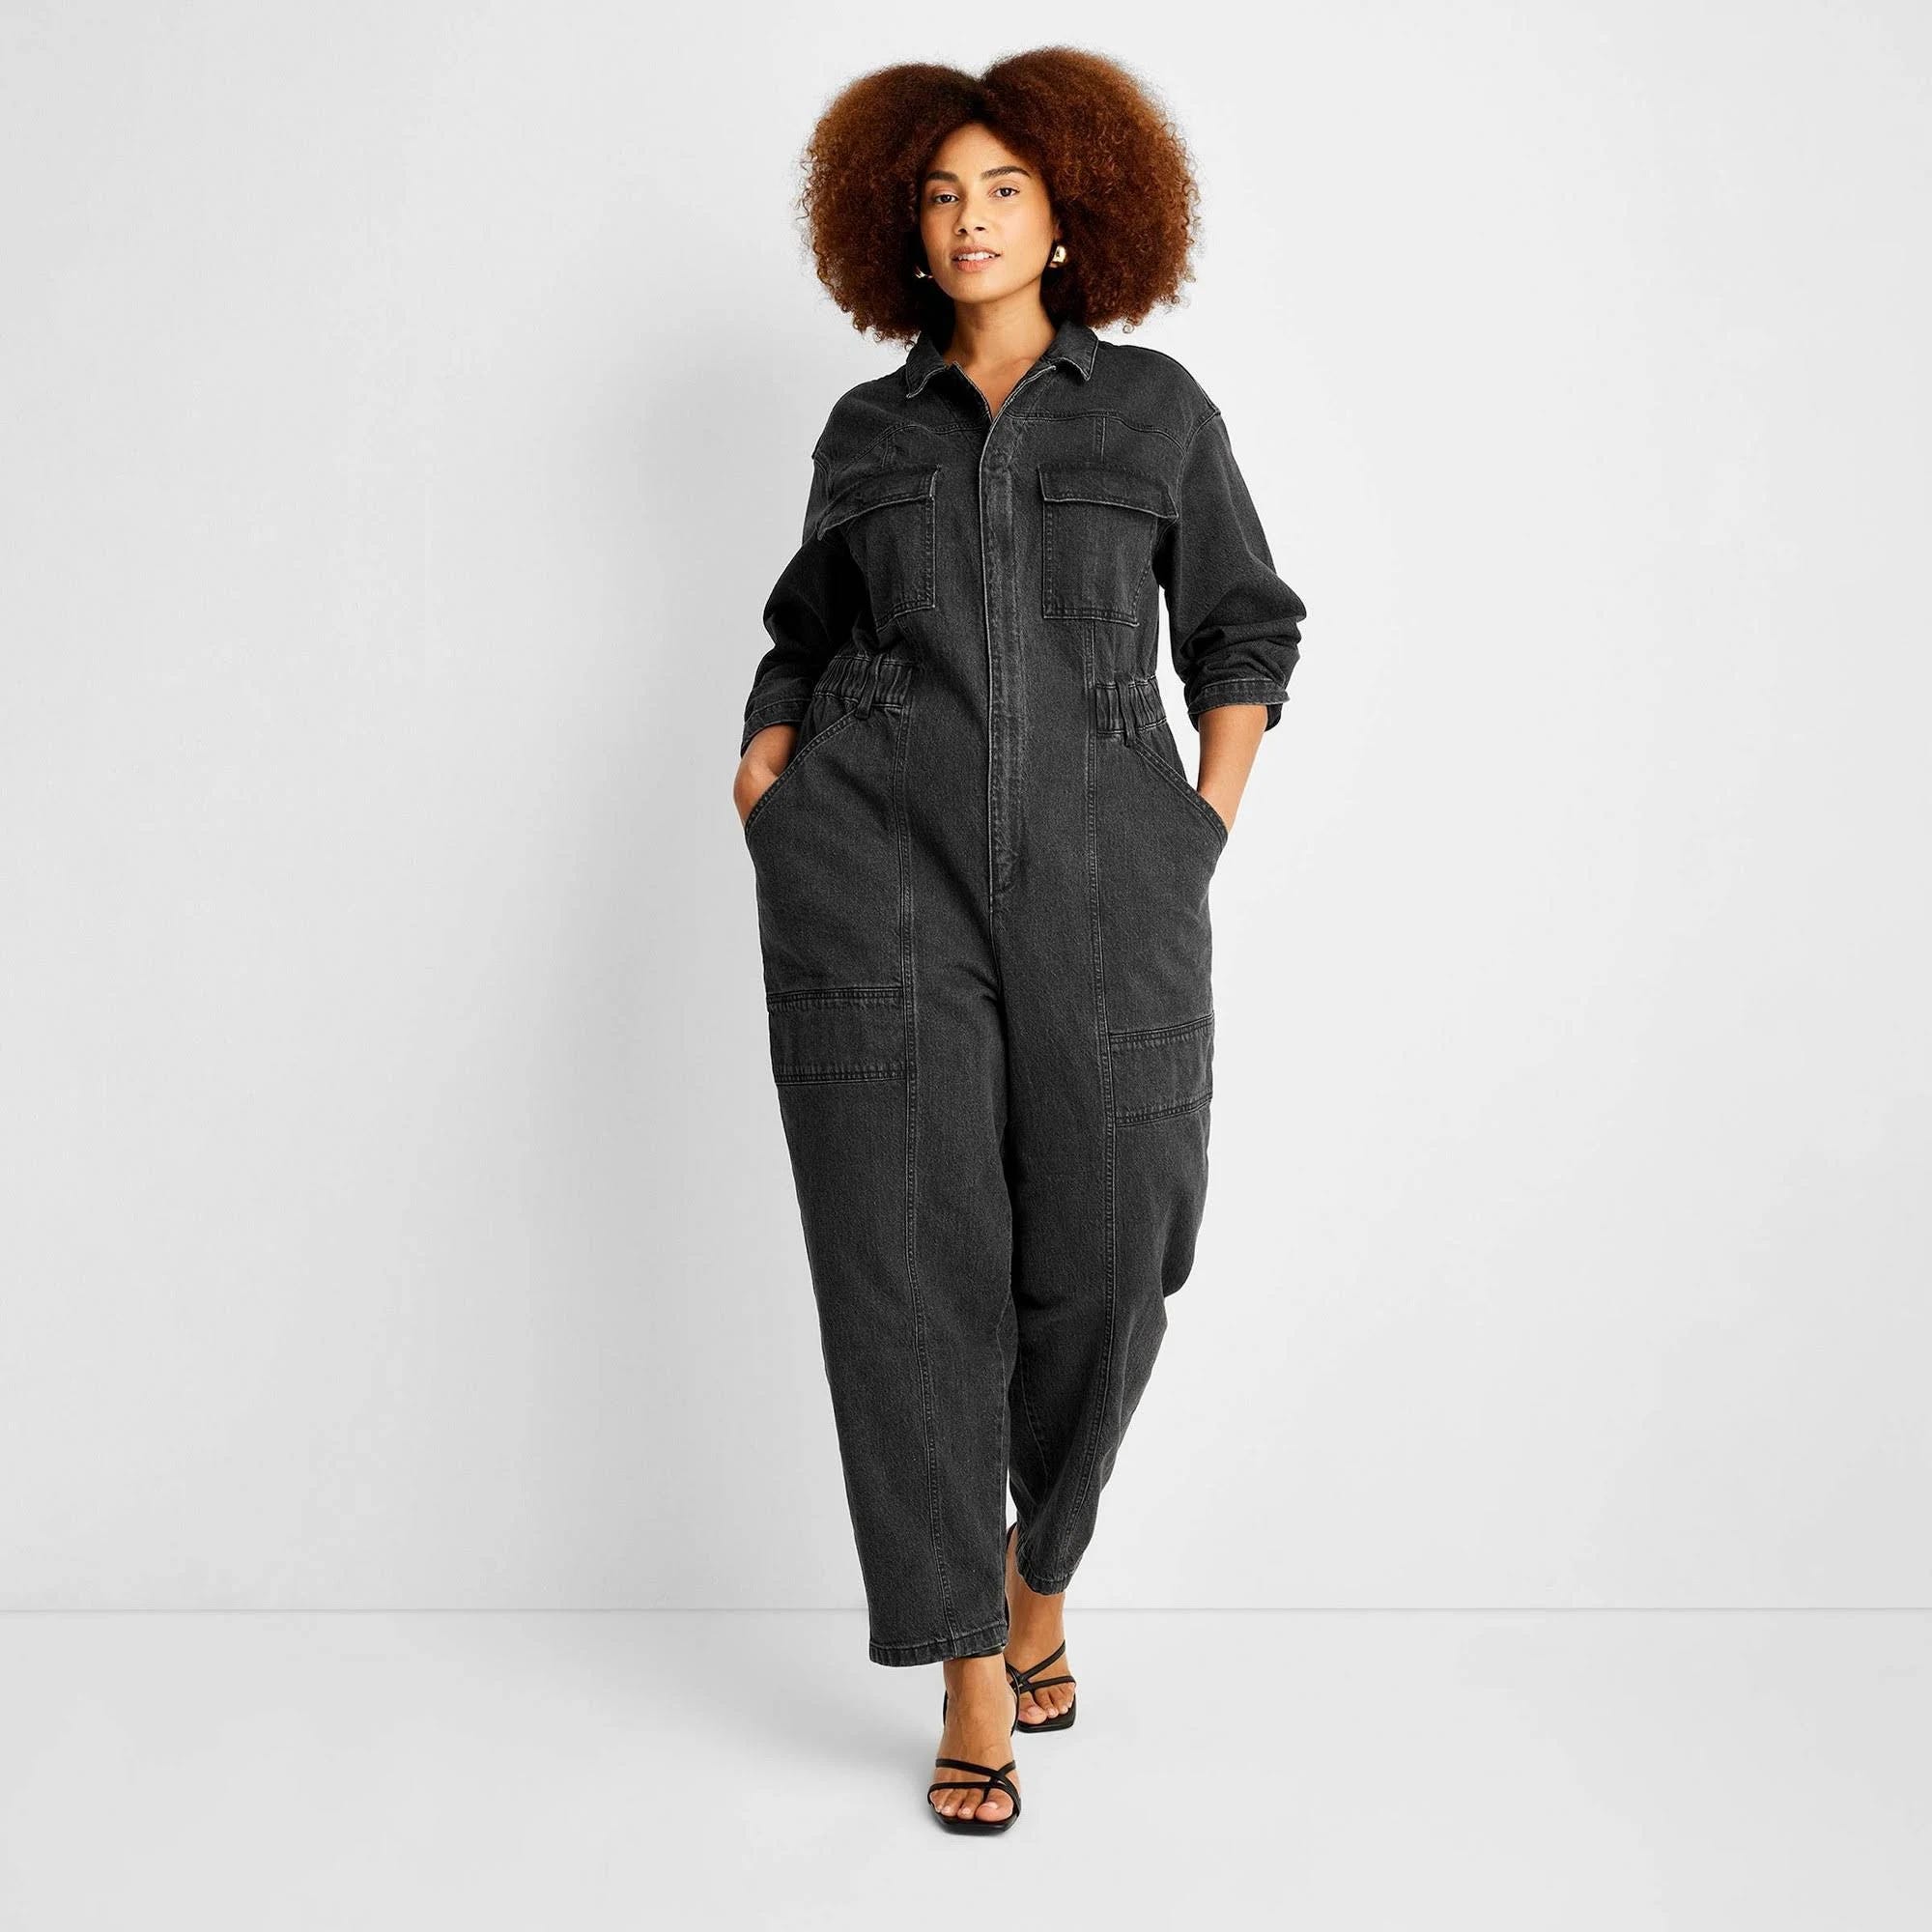 Stylish Black Denim Jumpsuit with Full-Length Design | Image